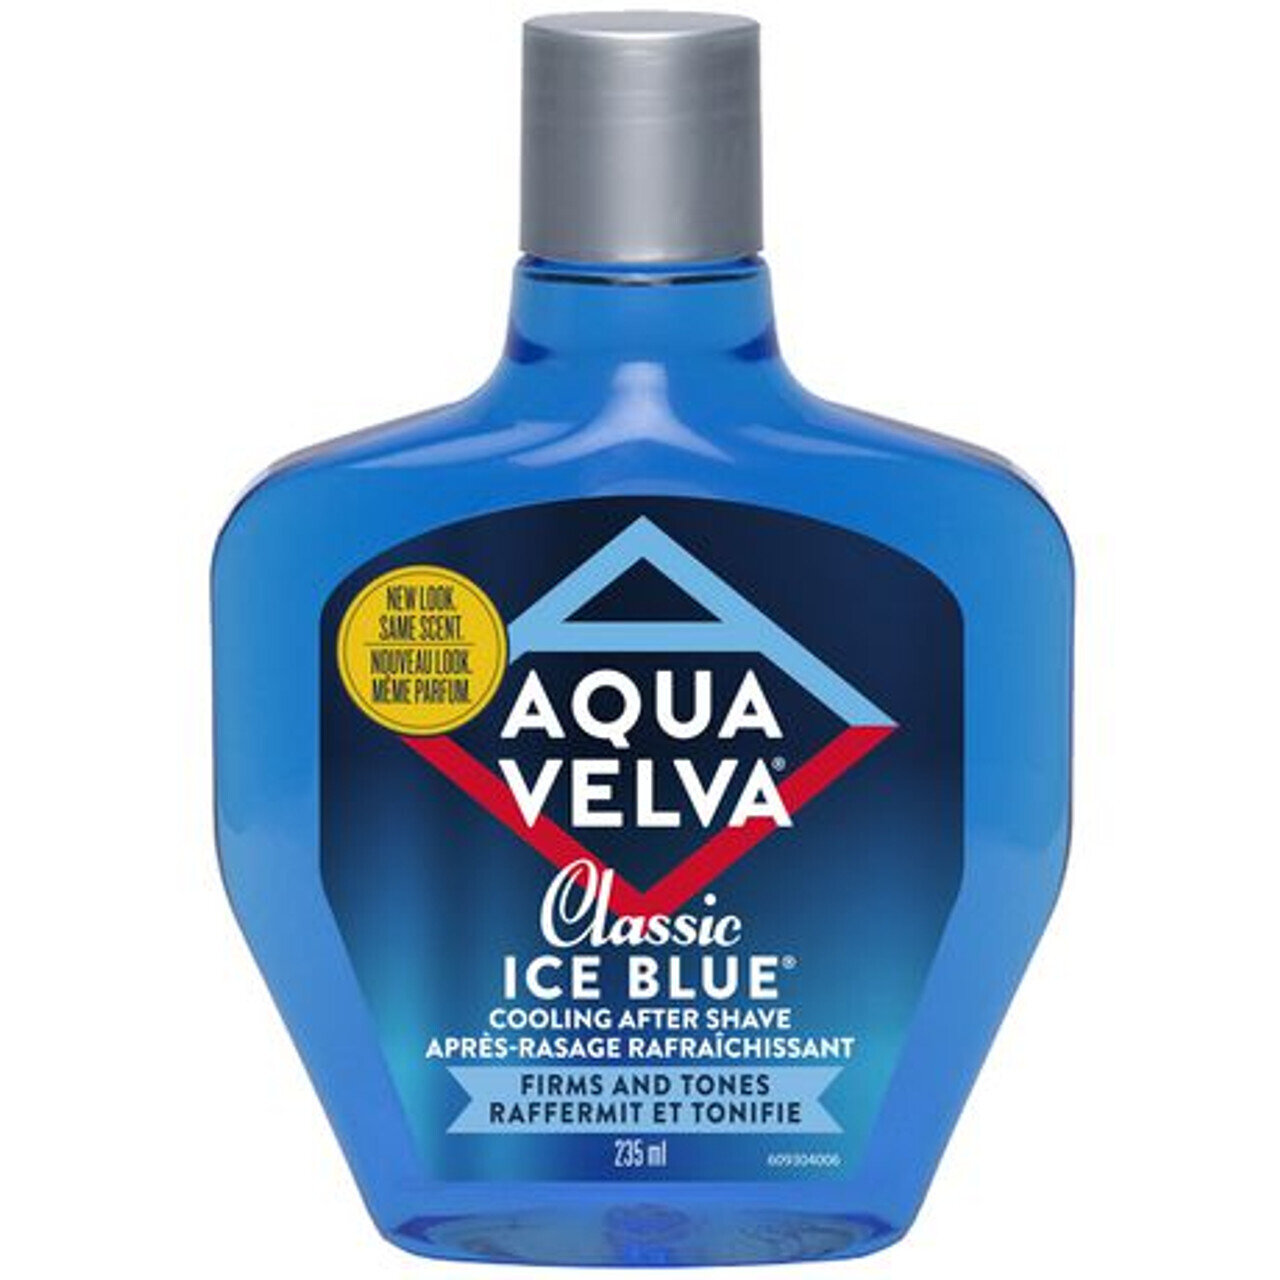 Aqua Velva Classic Ice Blue, Cooling After Shave, 235 mL